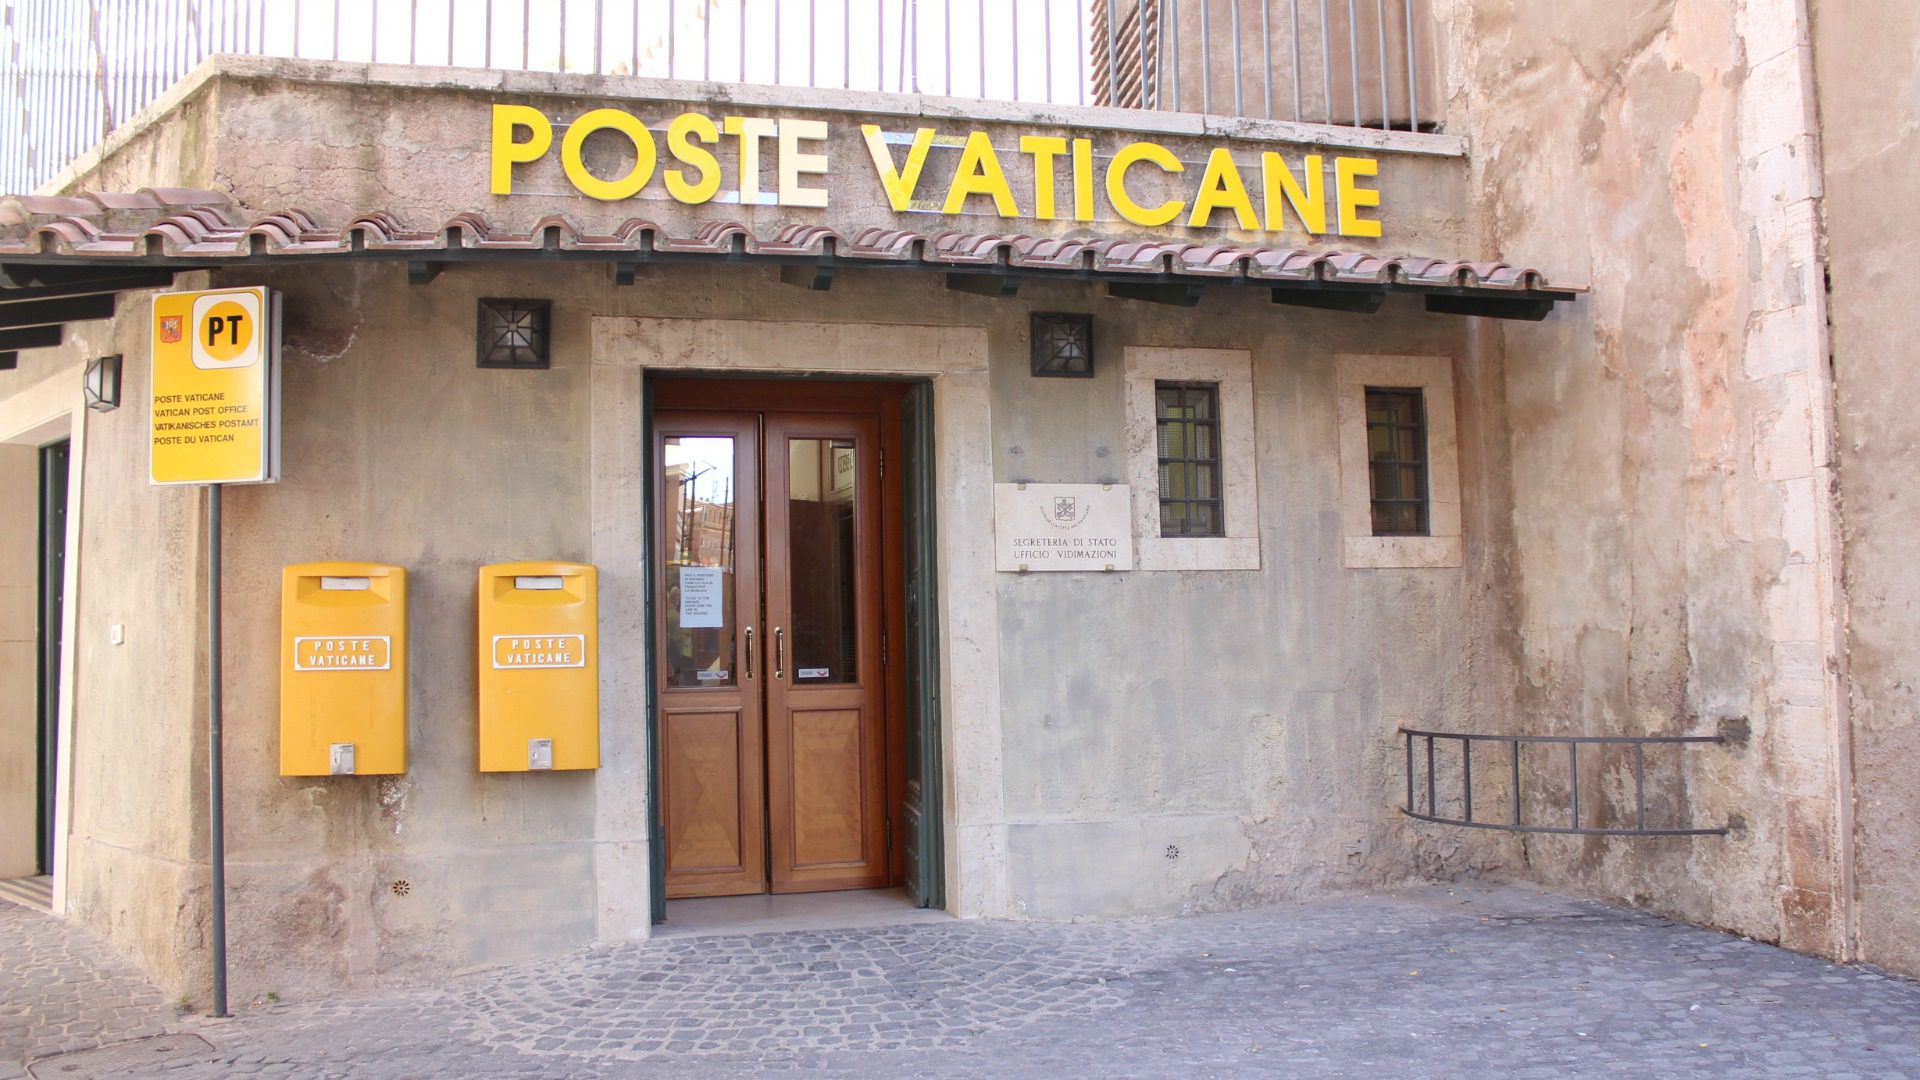 Poste vaticane. (Photo: Craig Murphy/Wikimedia)